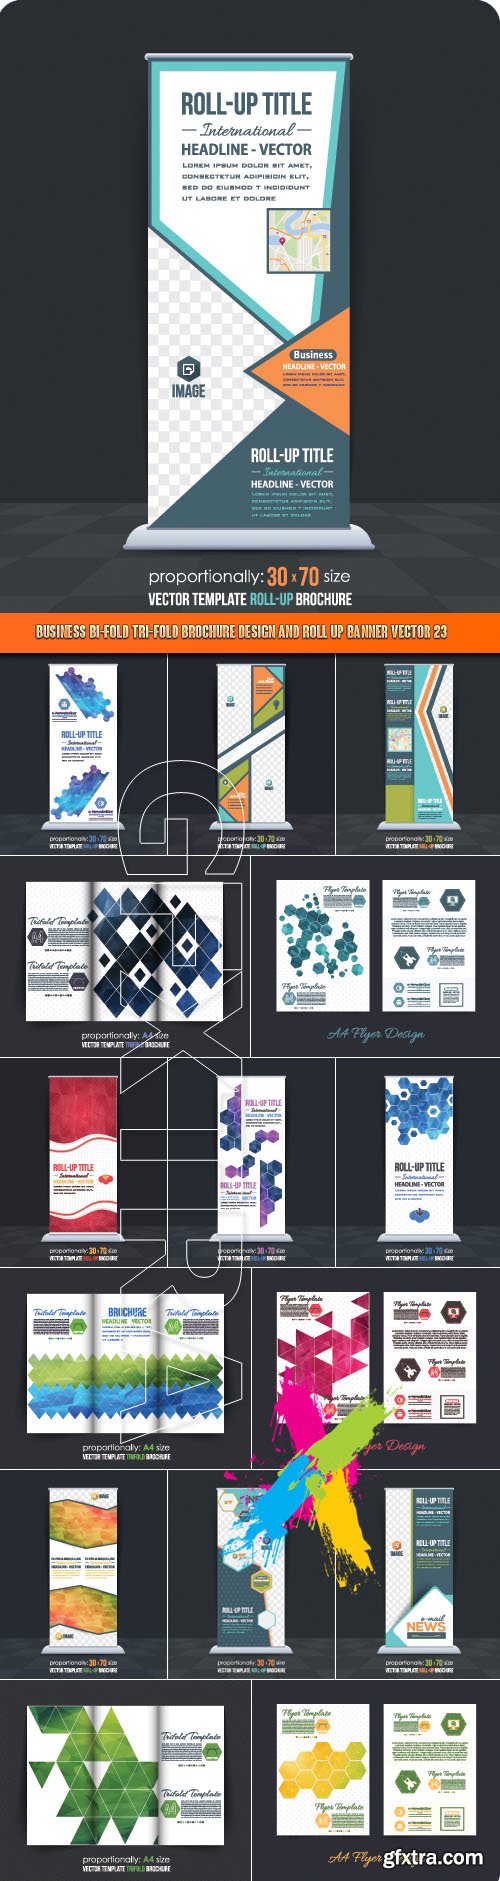 Business Bi-Fold Tri-Fold Brochure Design and Roll up banner vector 23